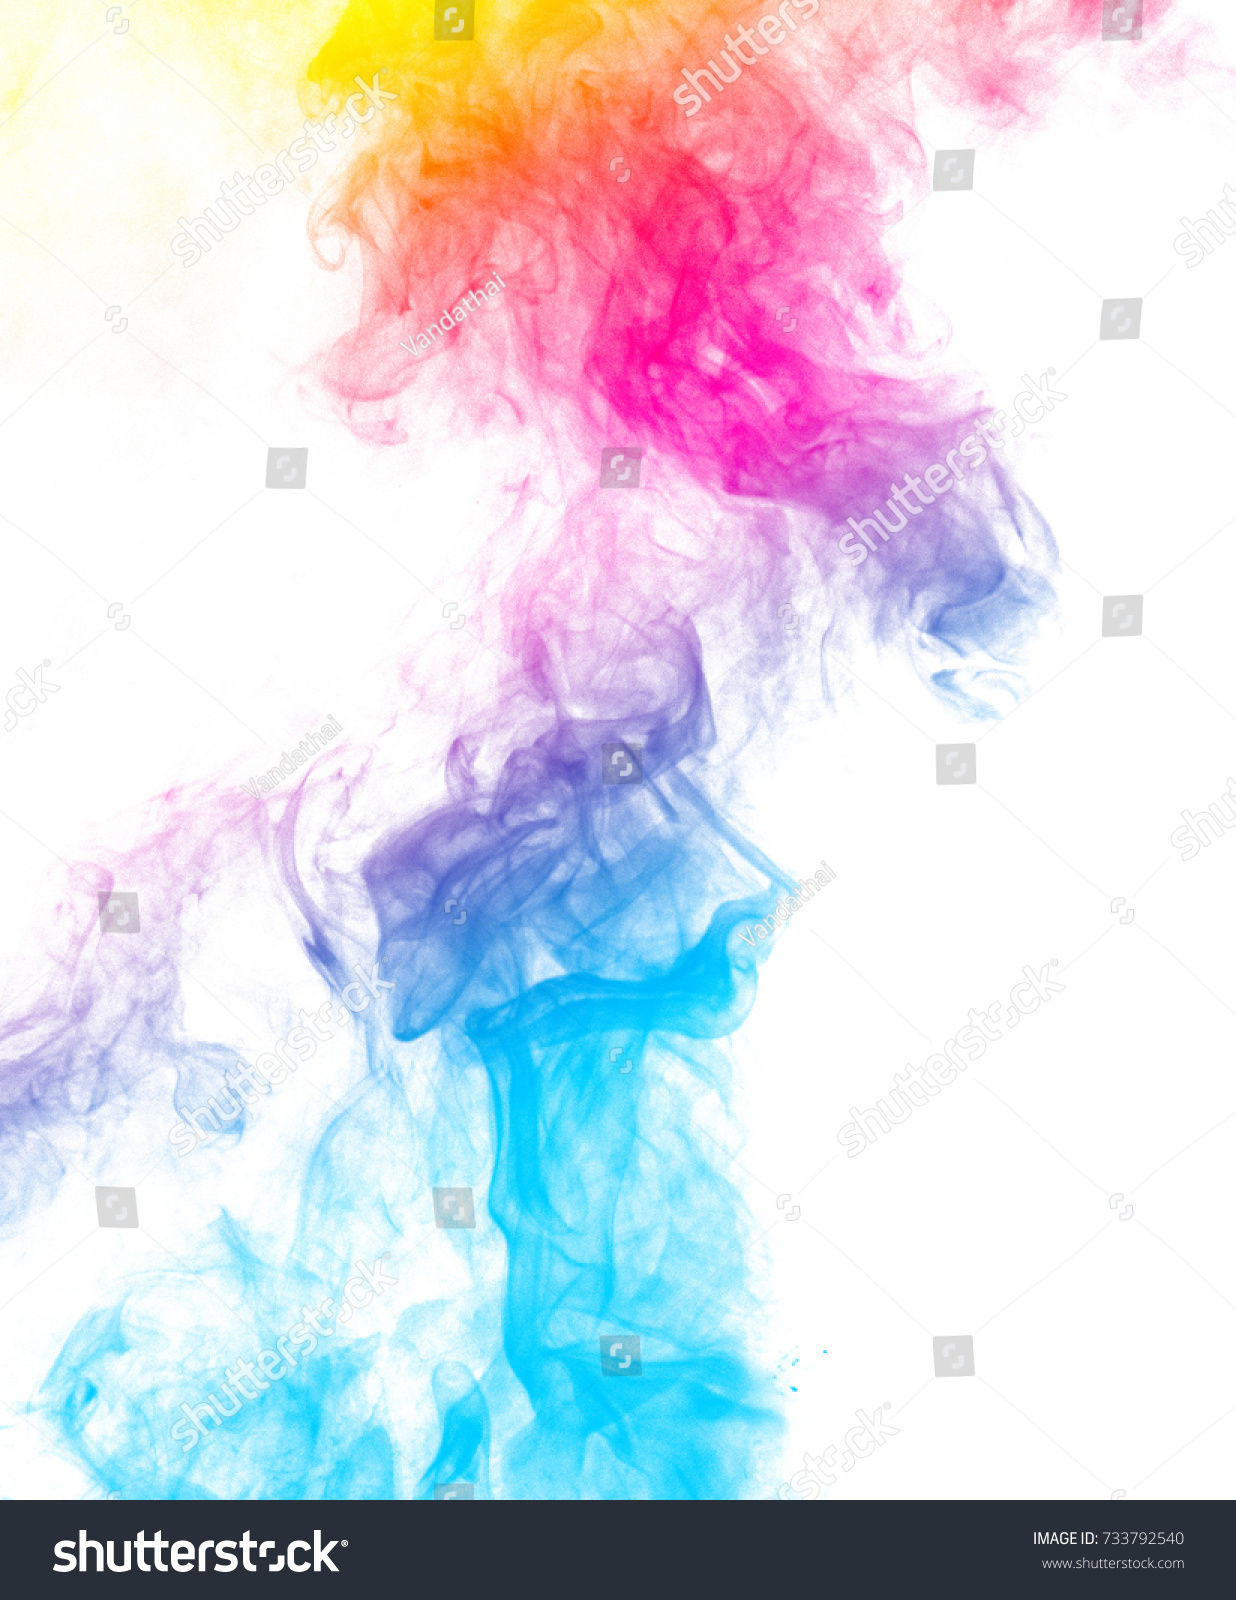 Color smoke photo